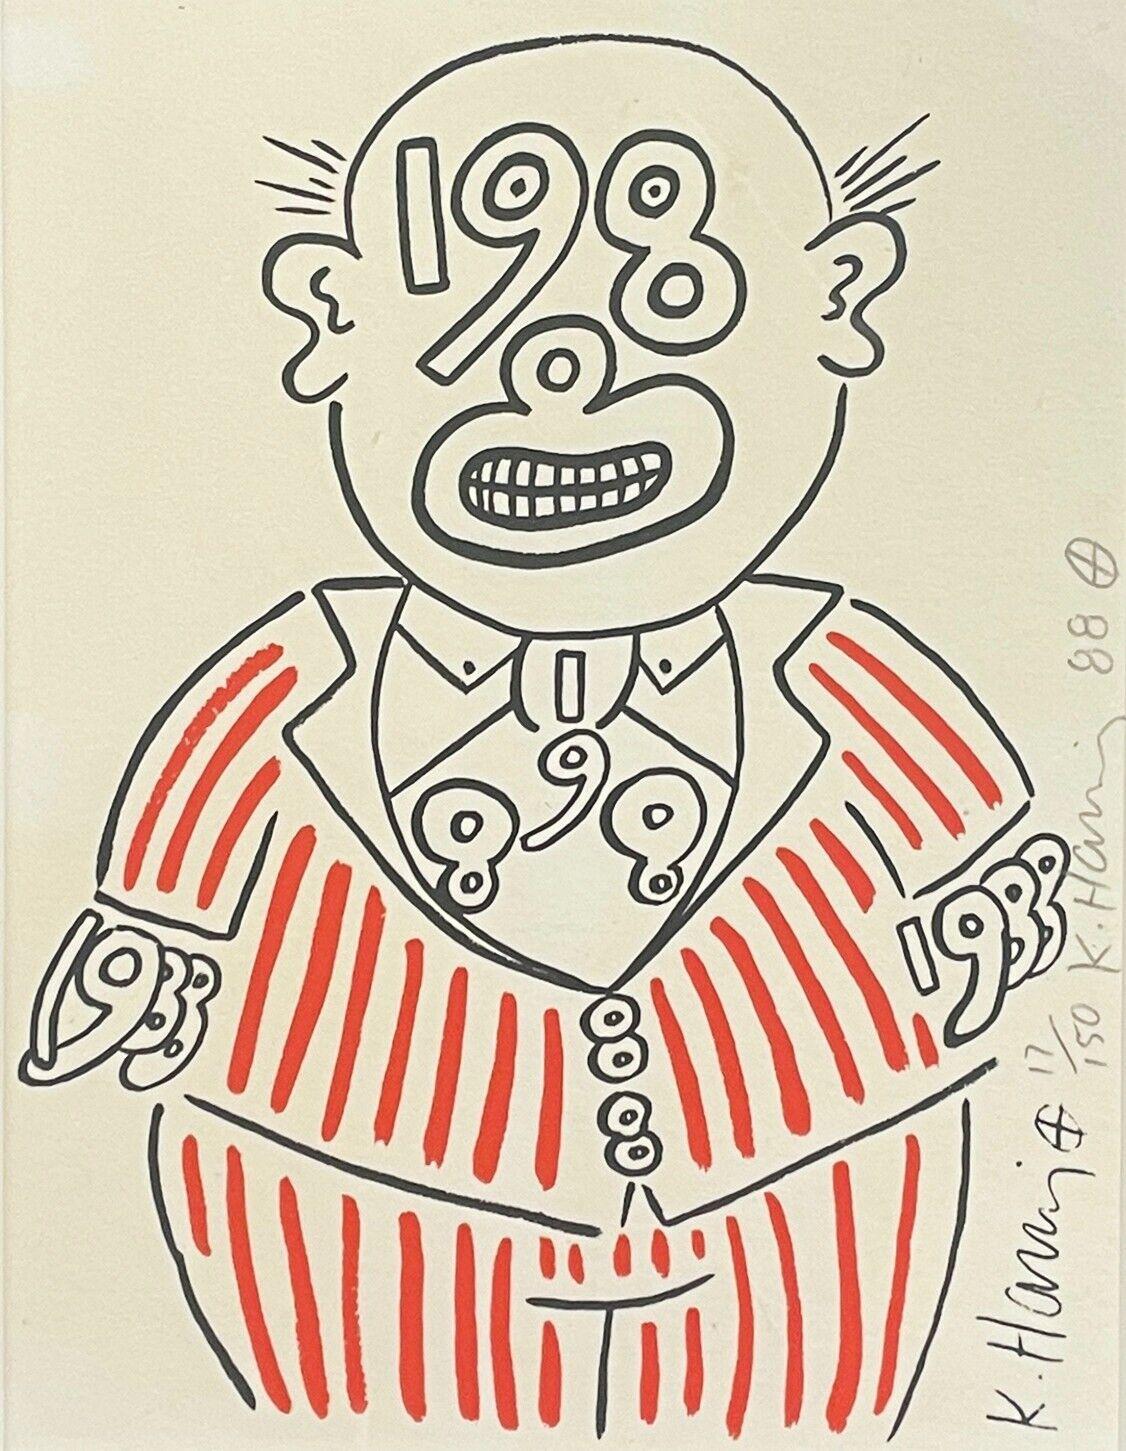 1988 Man - Original hand signed screen-print - Print by Keith Haring